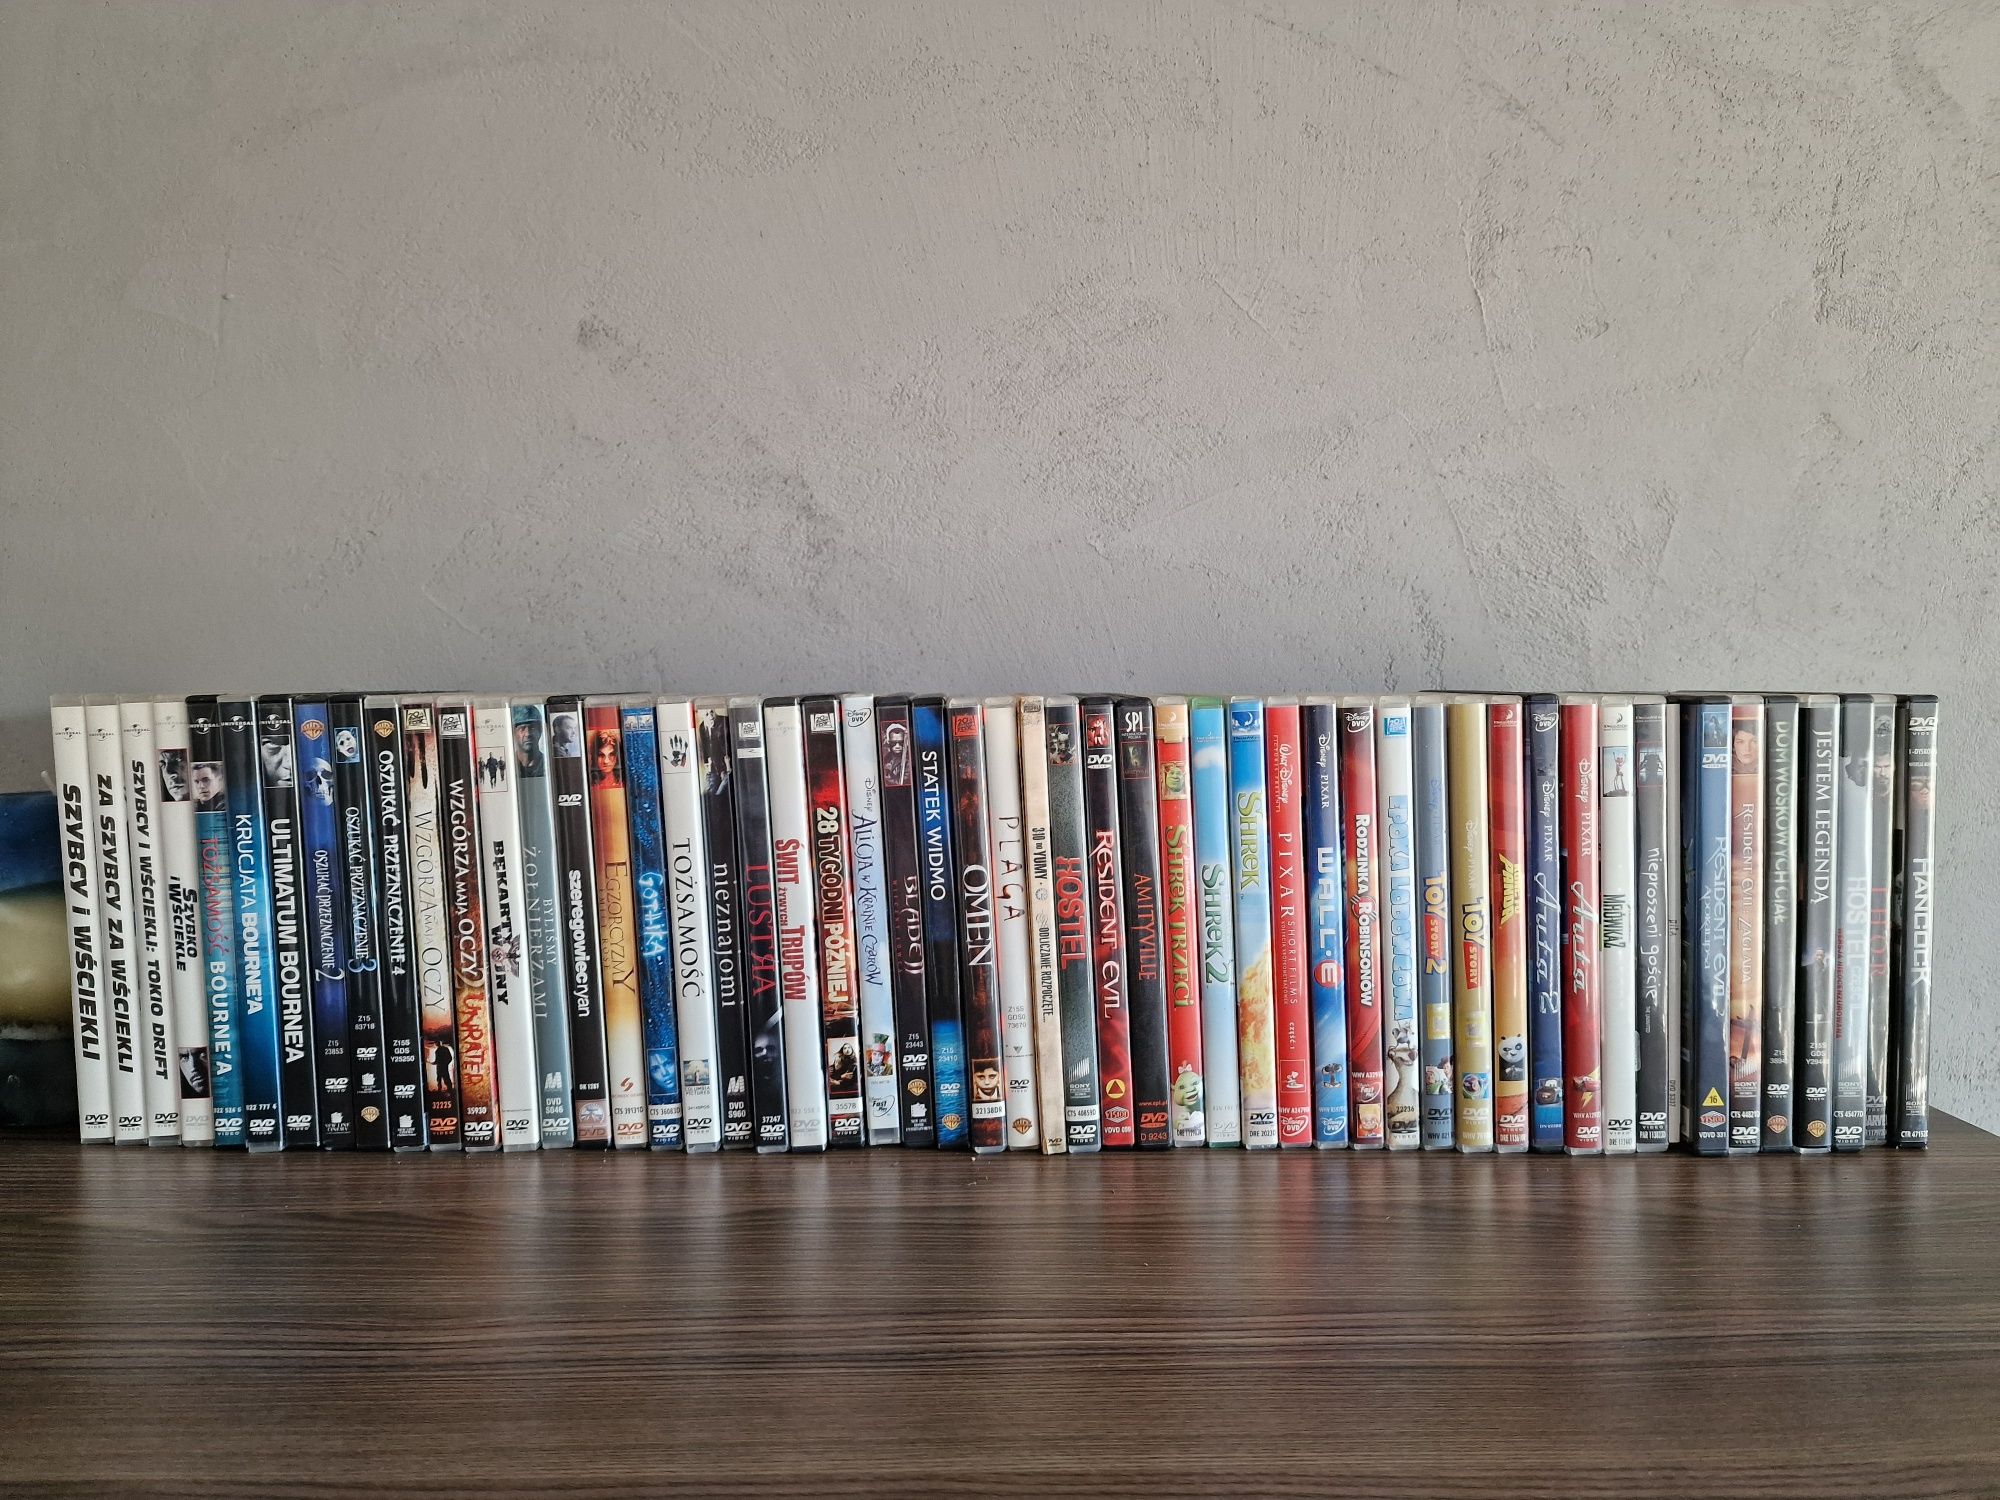 Kolekcja filmów Blu-ray i dvd